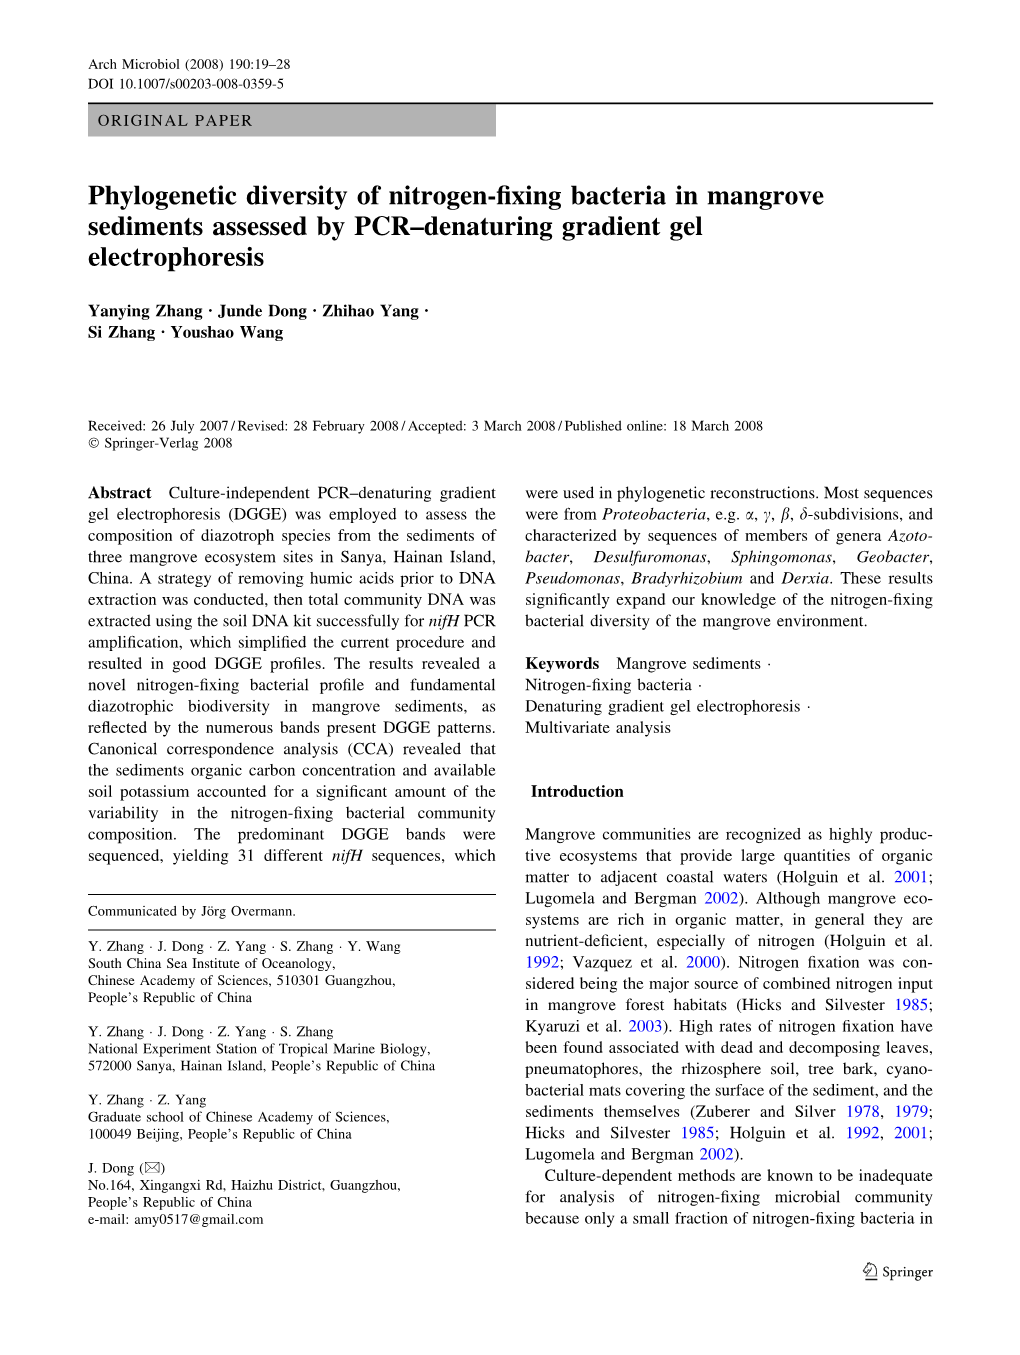 Phylogenetic Diversity of Nitrogen-Fixing Bacteria In